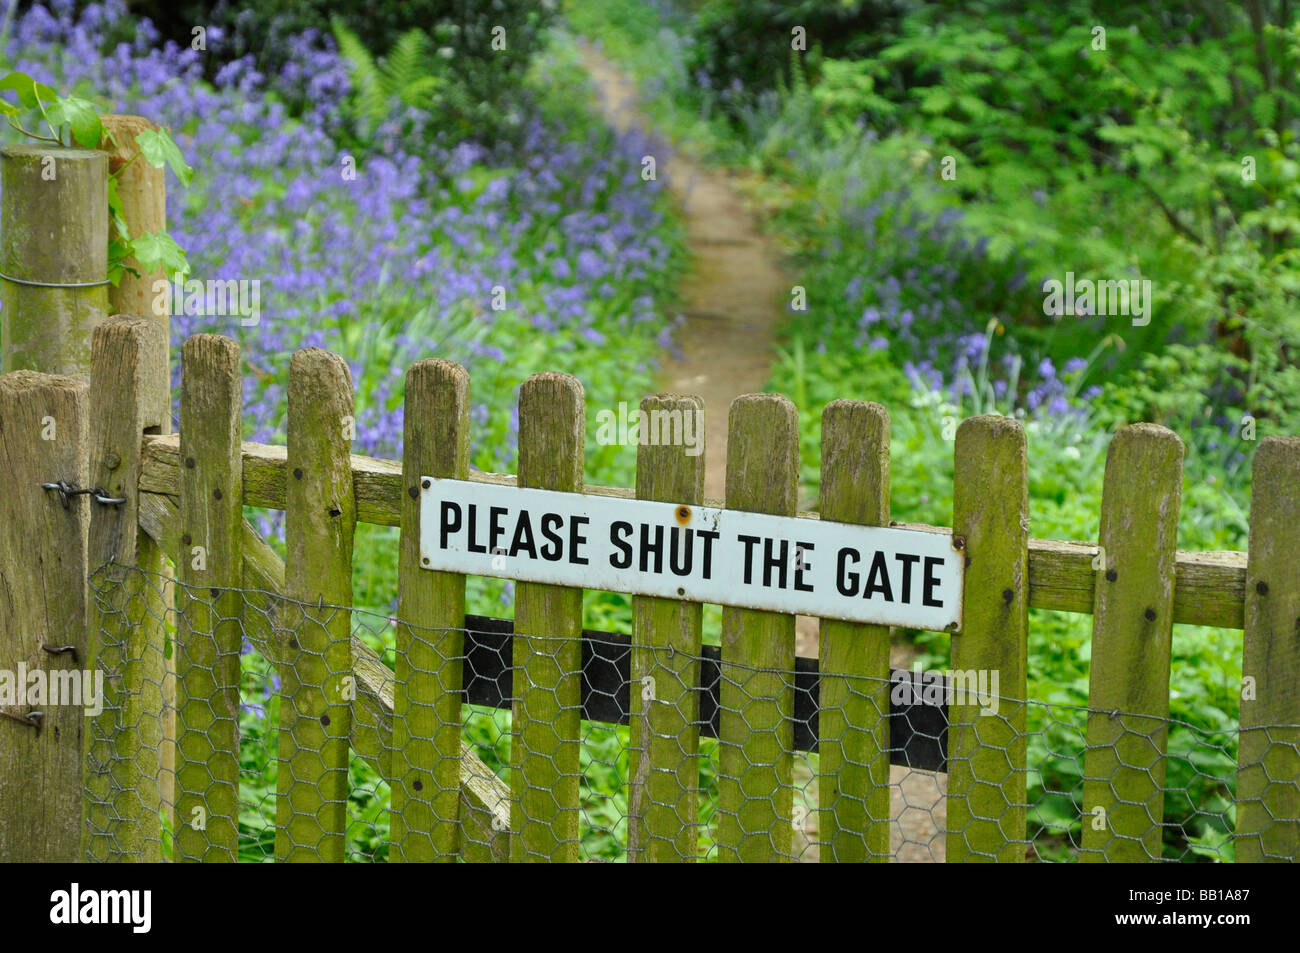 Please Close The Gates Thank You Polite Property Security House/Home/Garden Sign